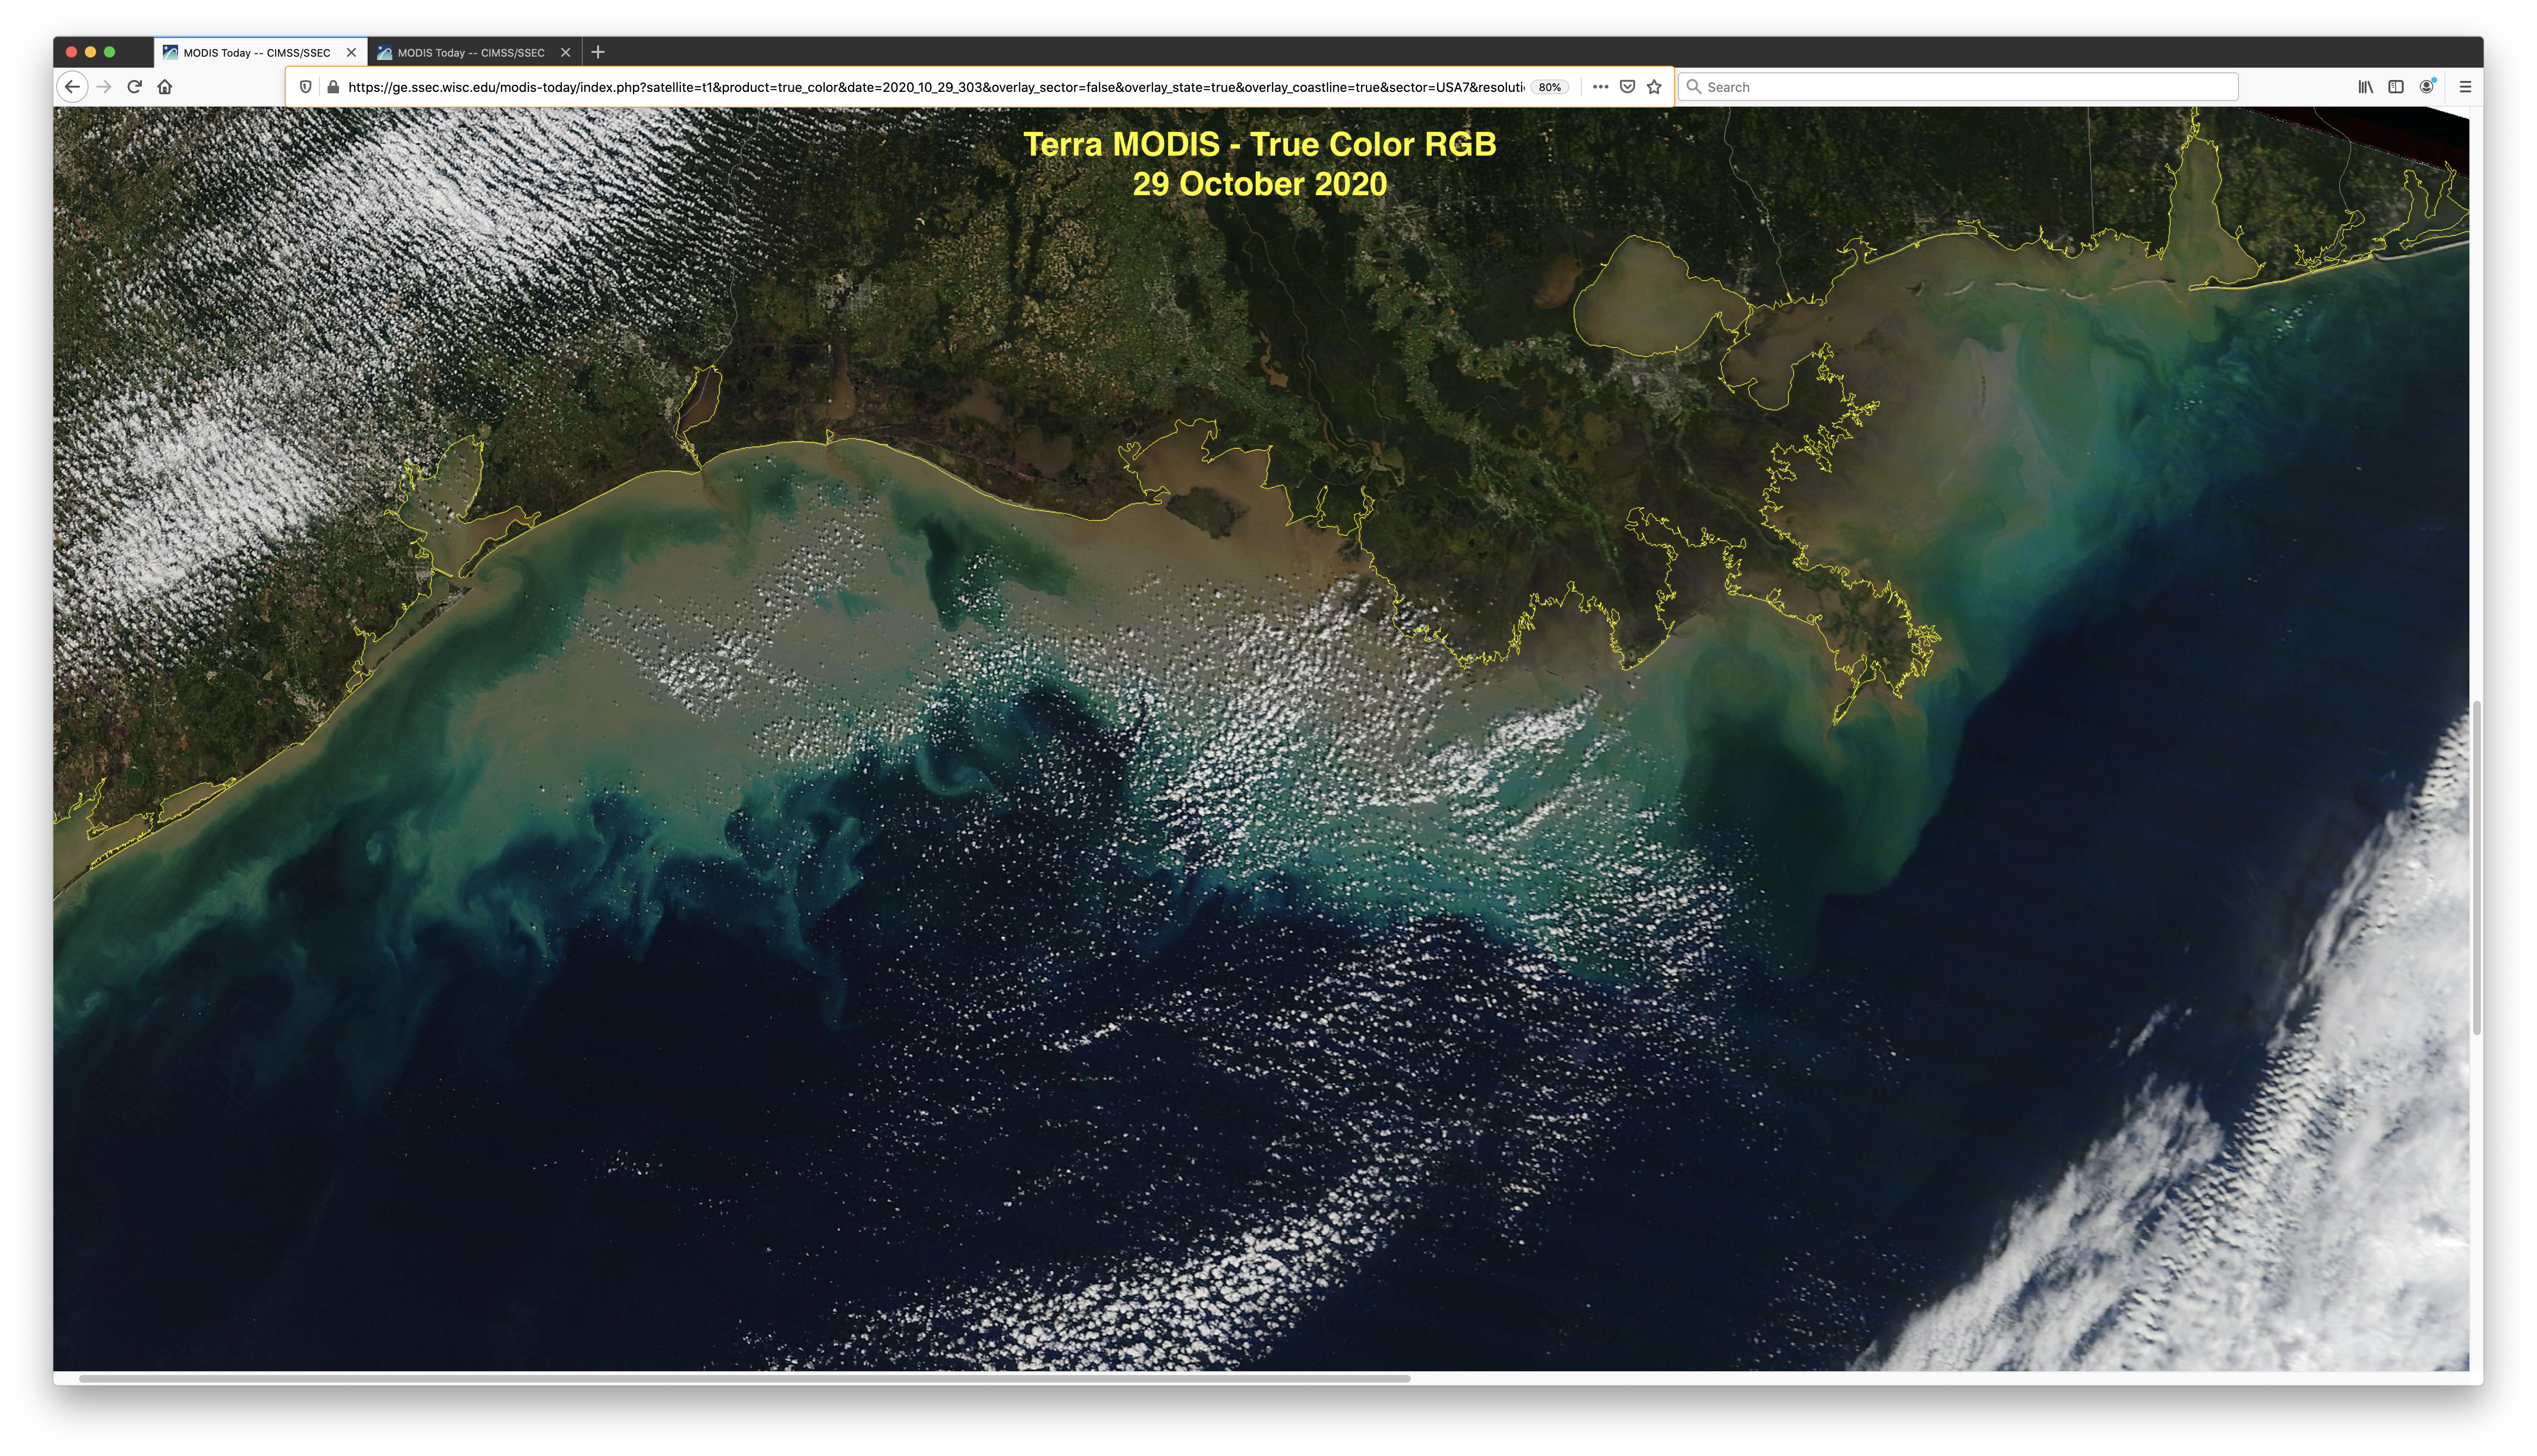 Terra MODIS True Color RGB image [click to enlarge]